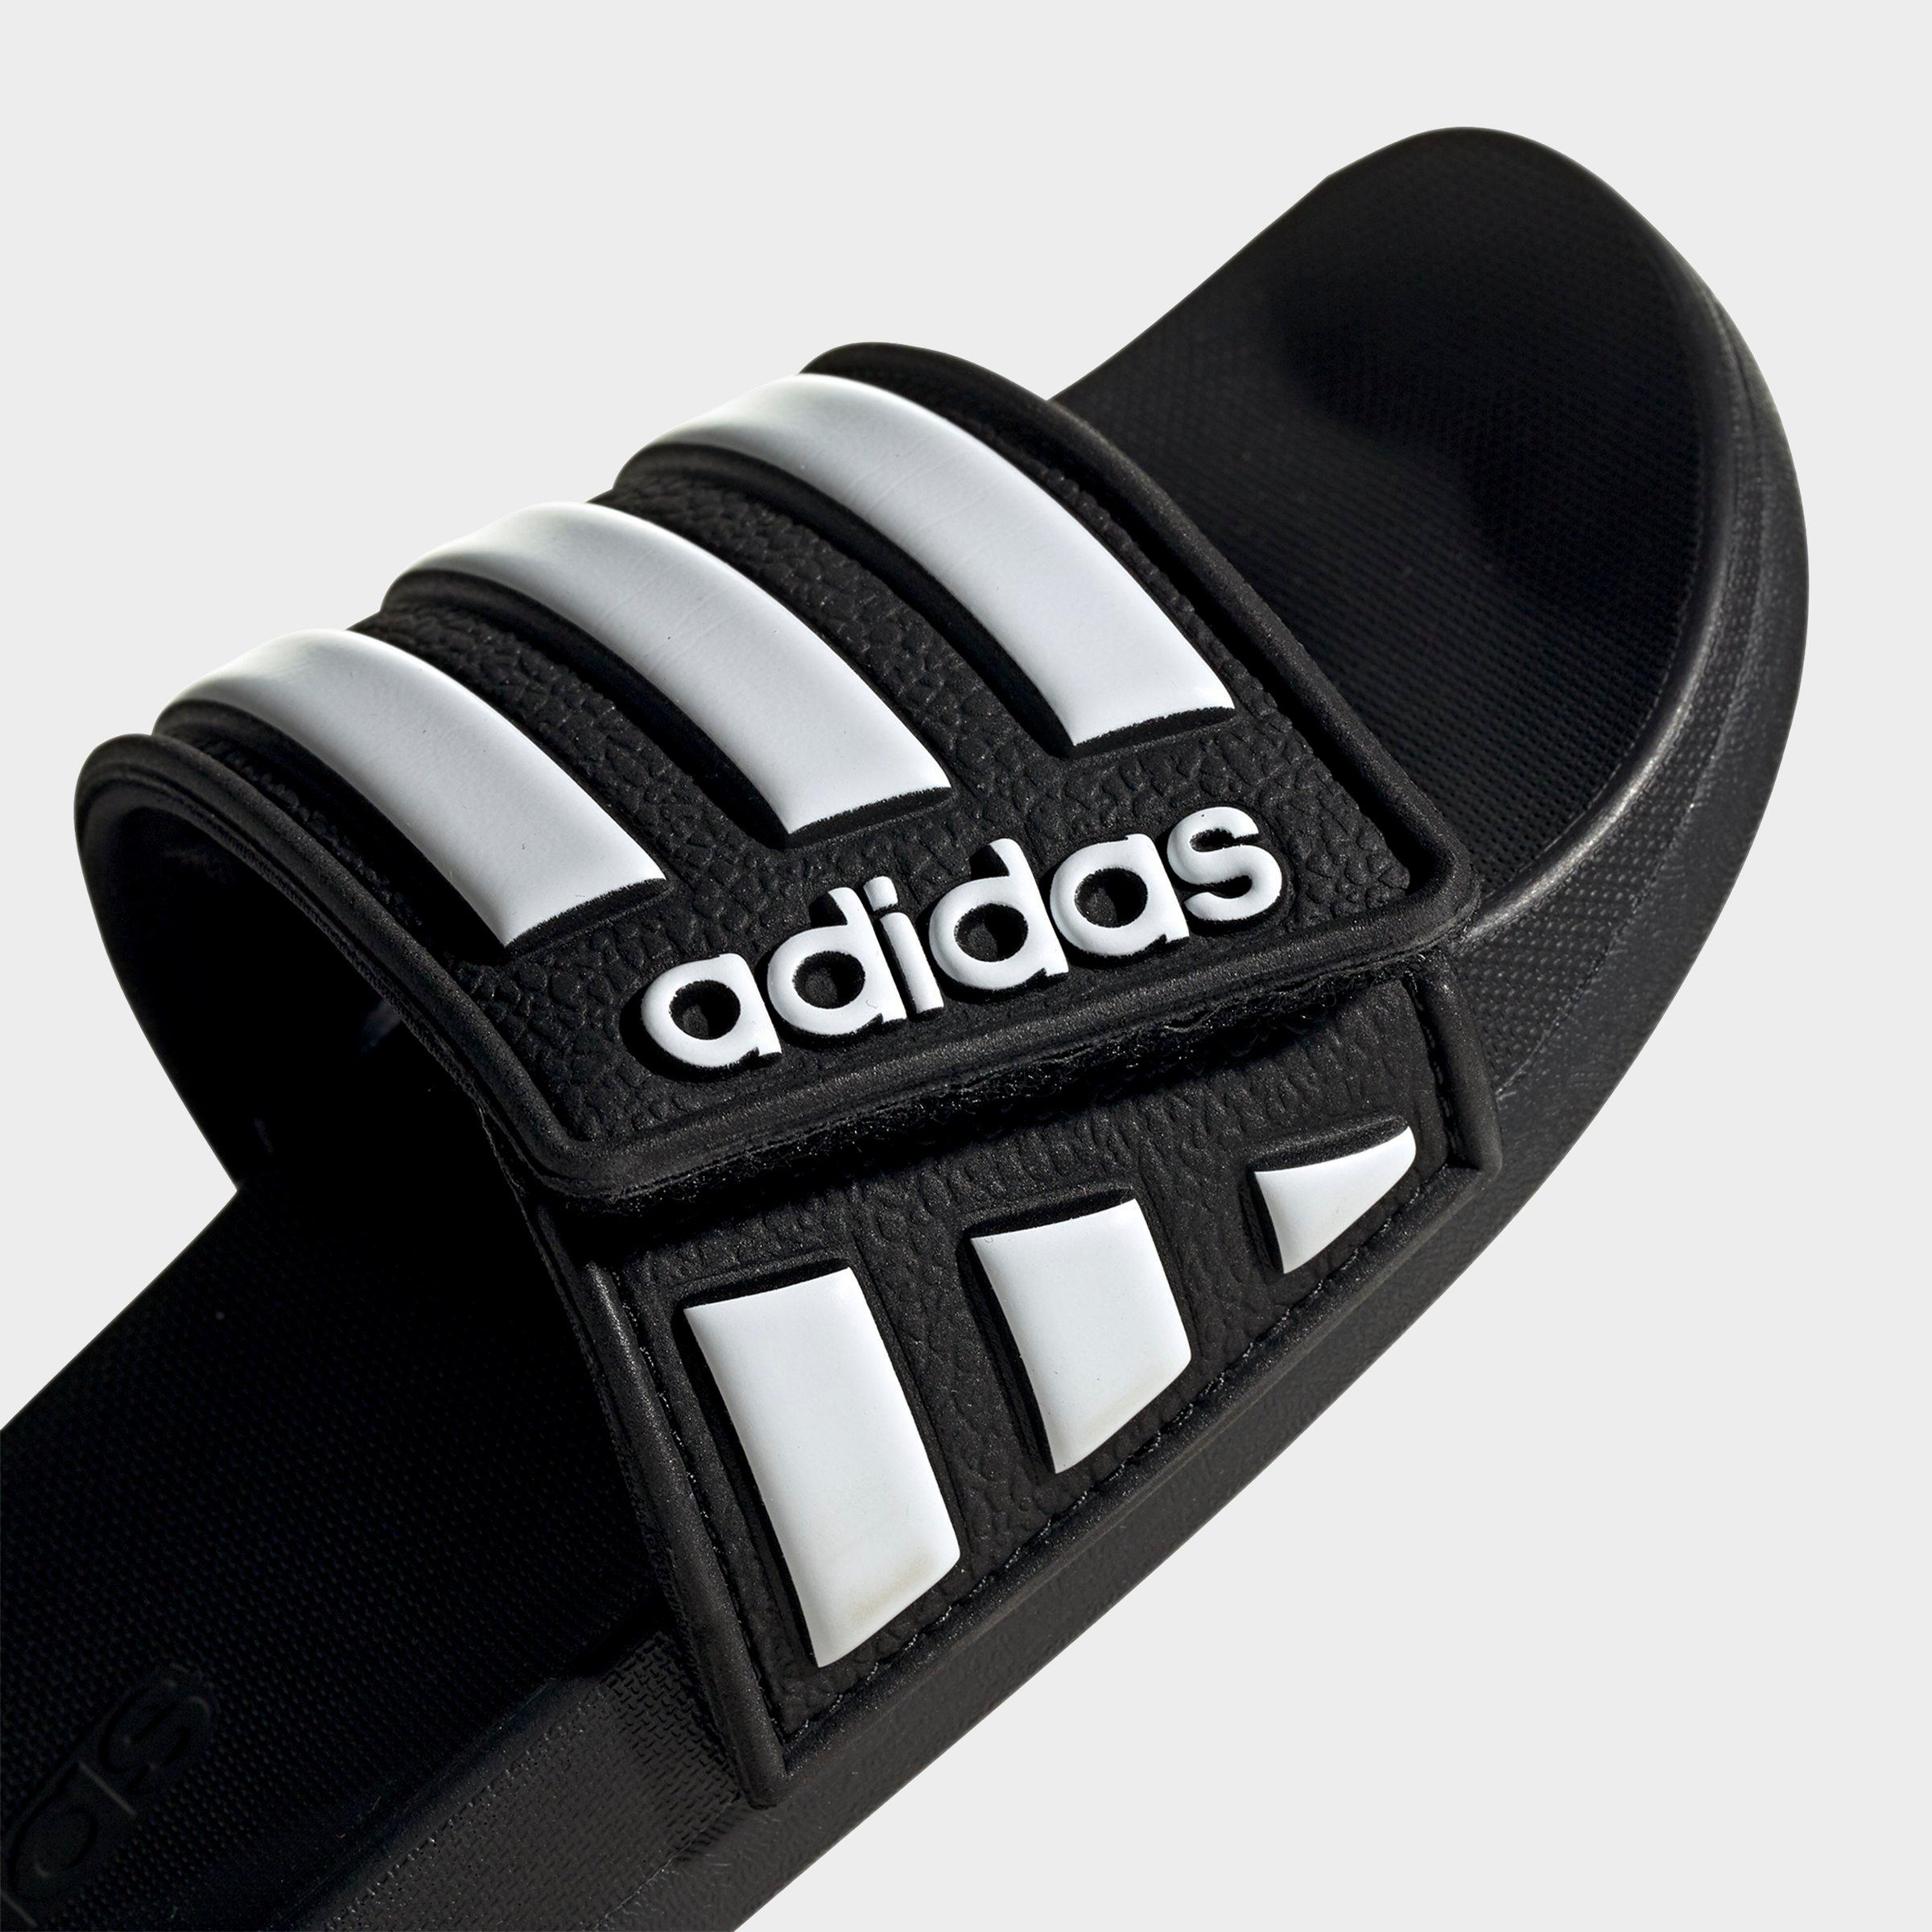 adidas comfort sandals kids